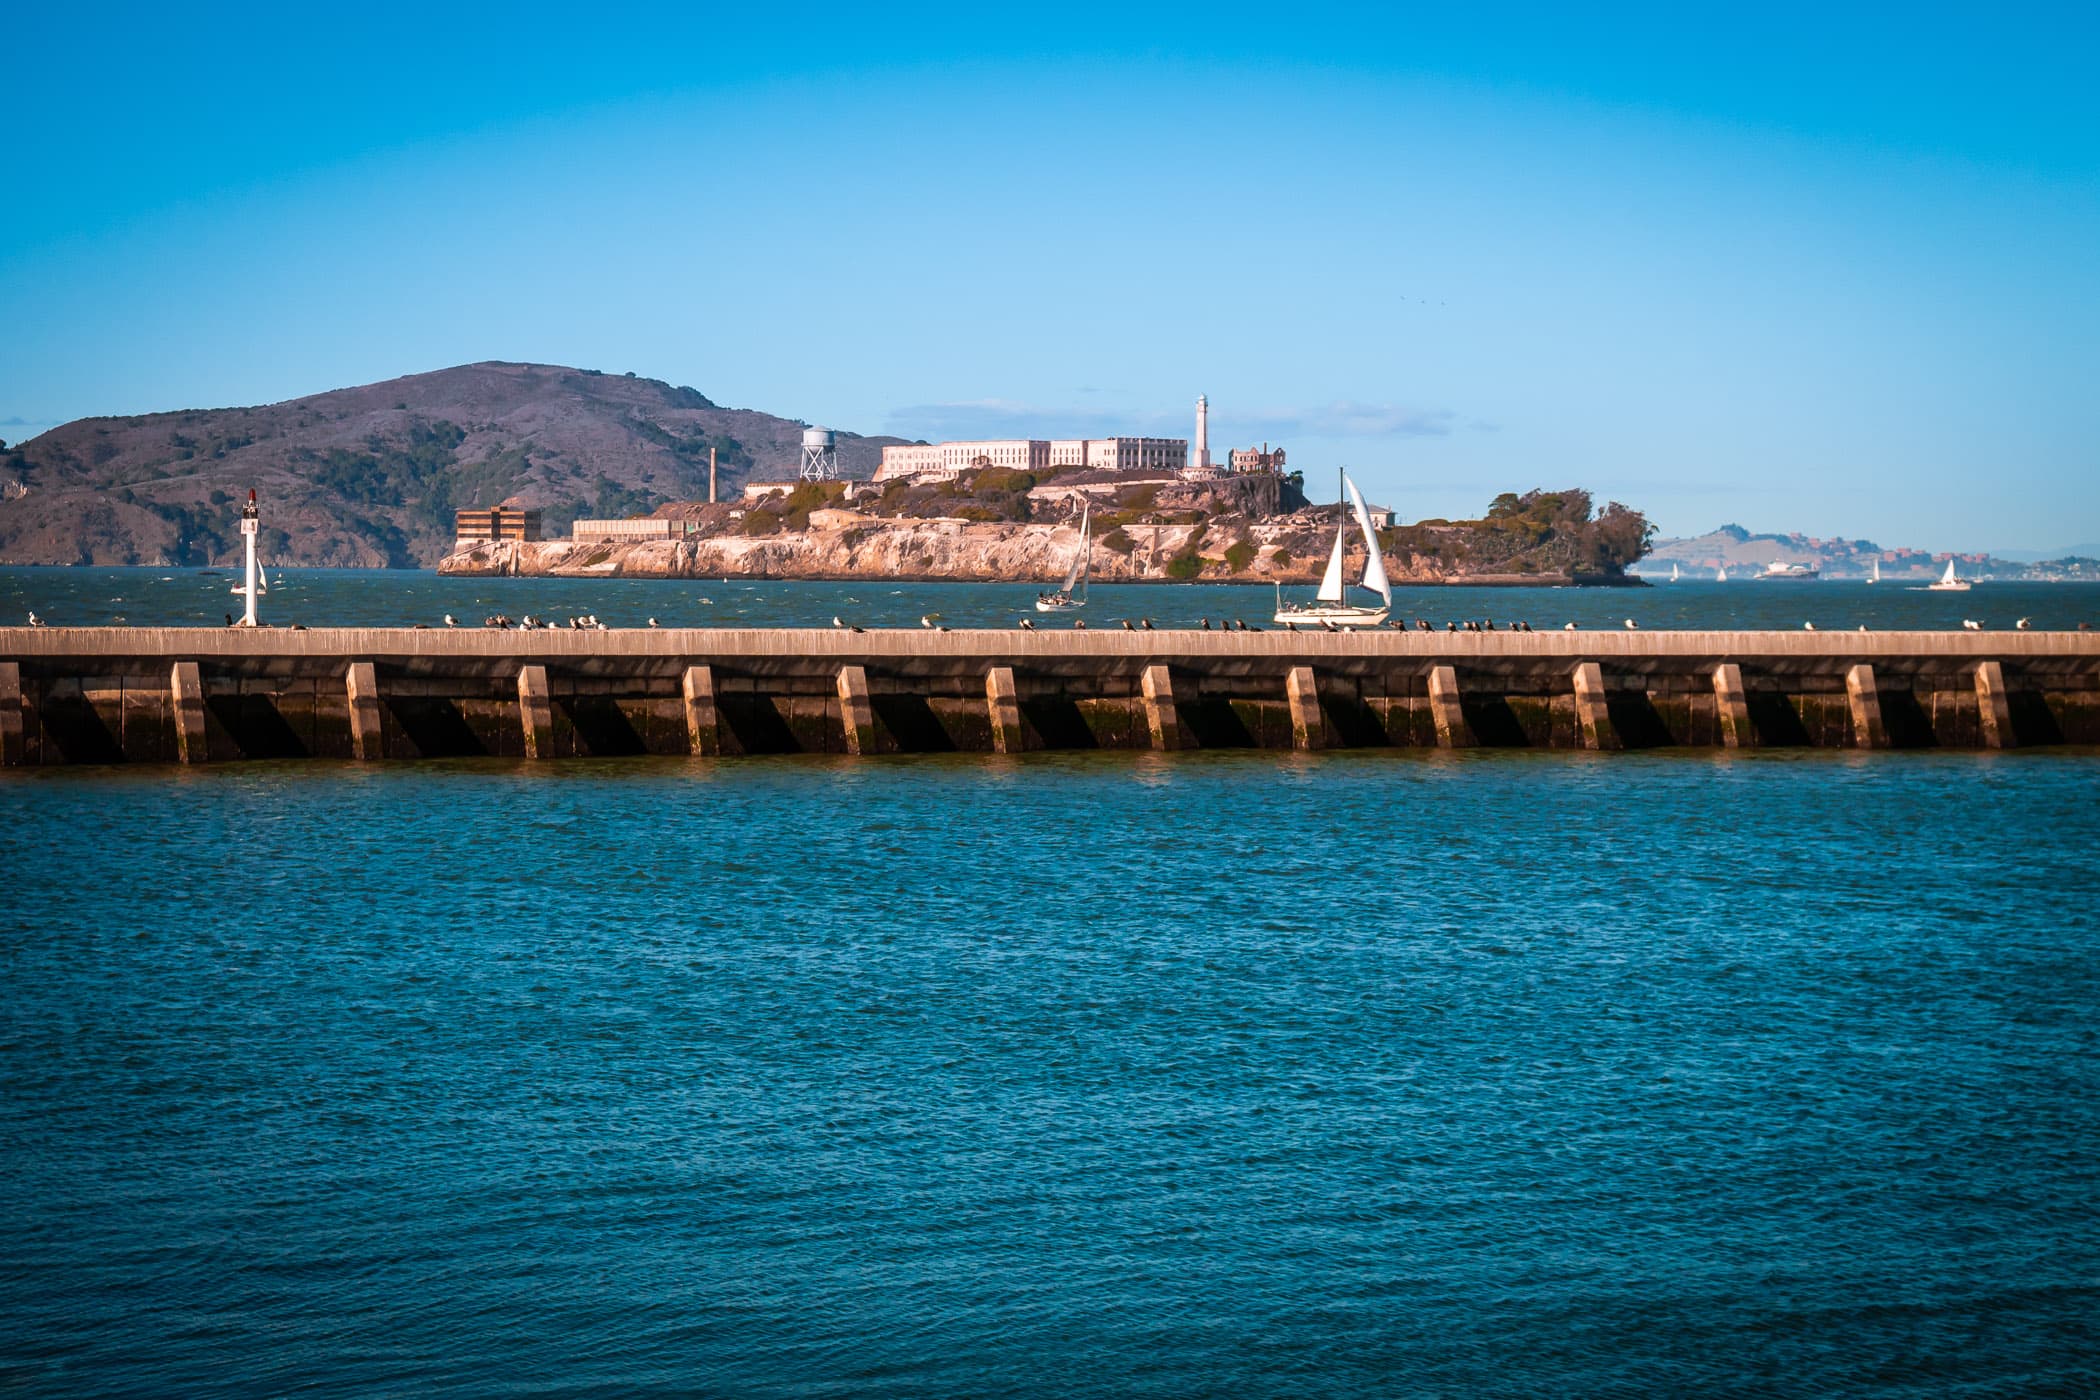 Alcatraz Island as seen from San Francisco's Aquatic Park.